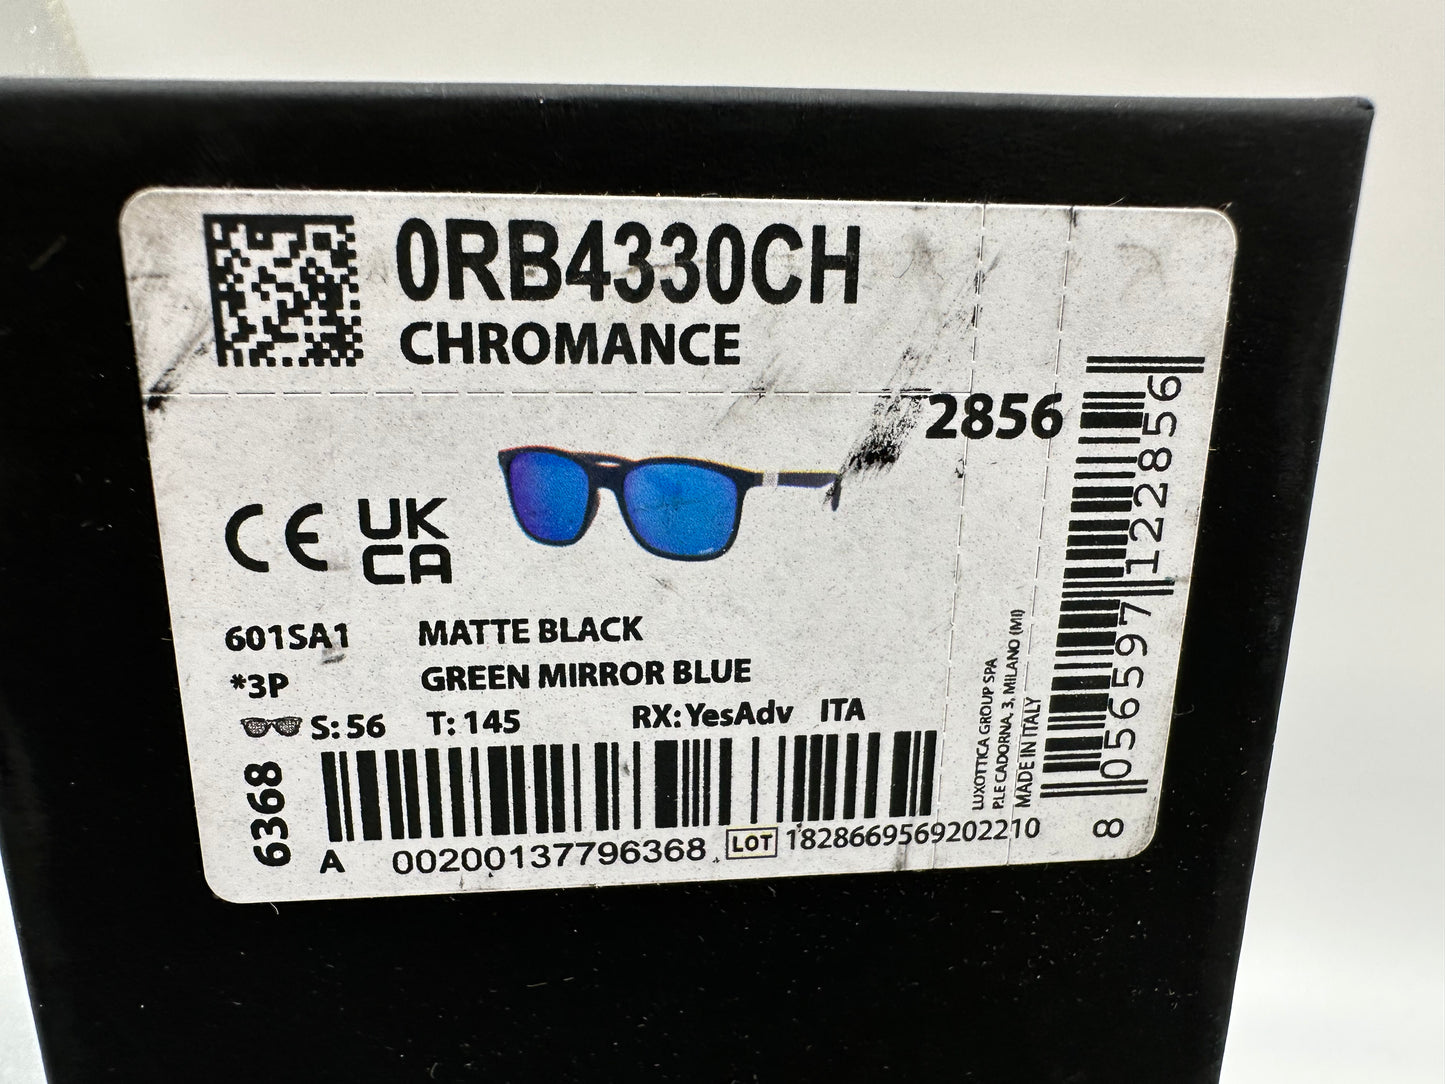 Ray-Ban RB 4330CH 56mm CHROMANCE 601SA1 Matte Black Green Mirror Blue Italy